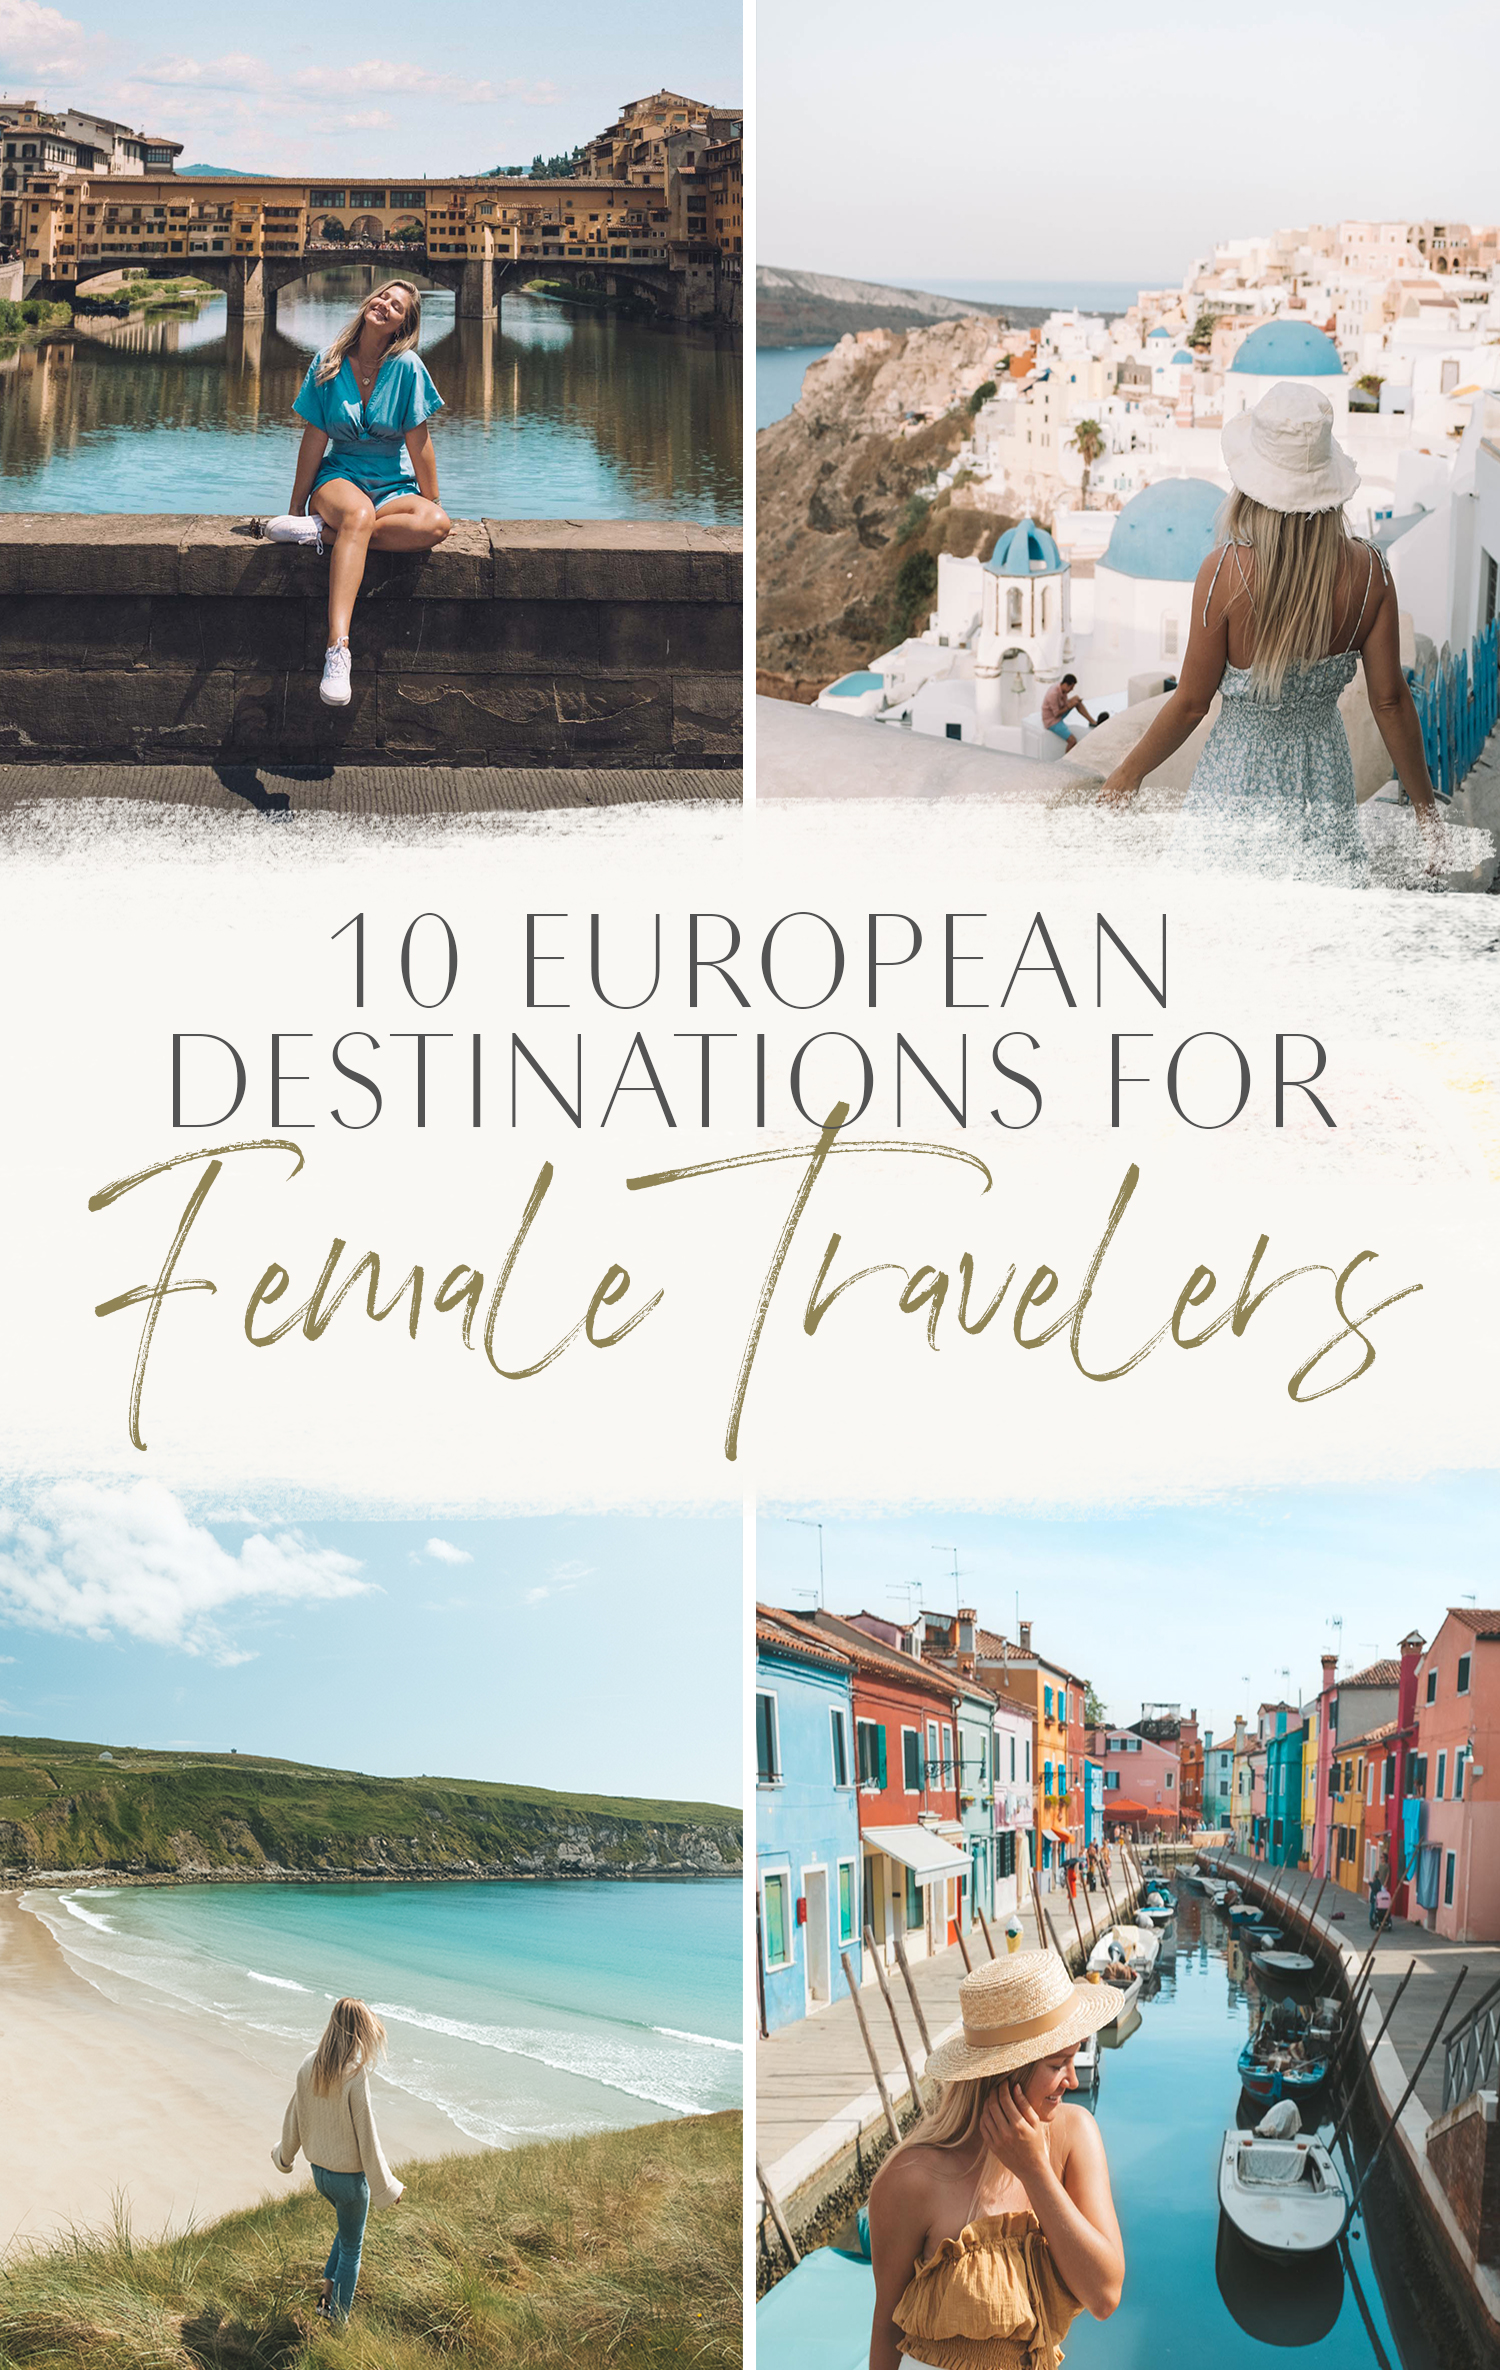 10 European Destinations for Female Travelers